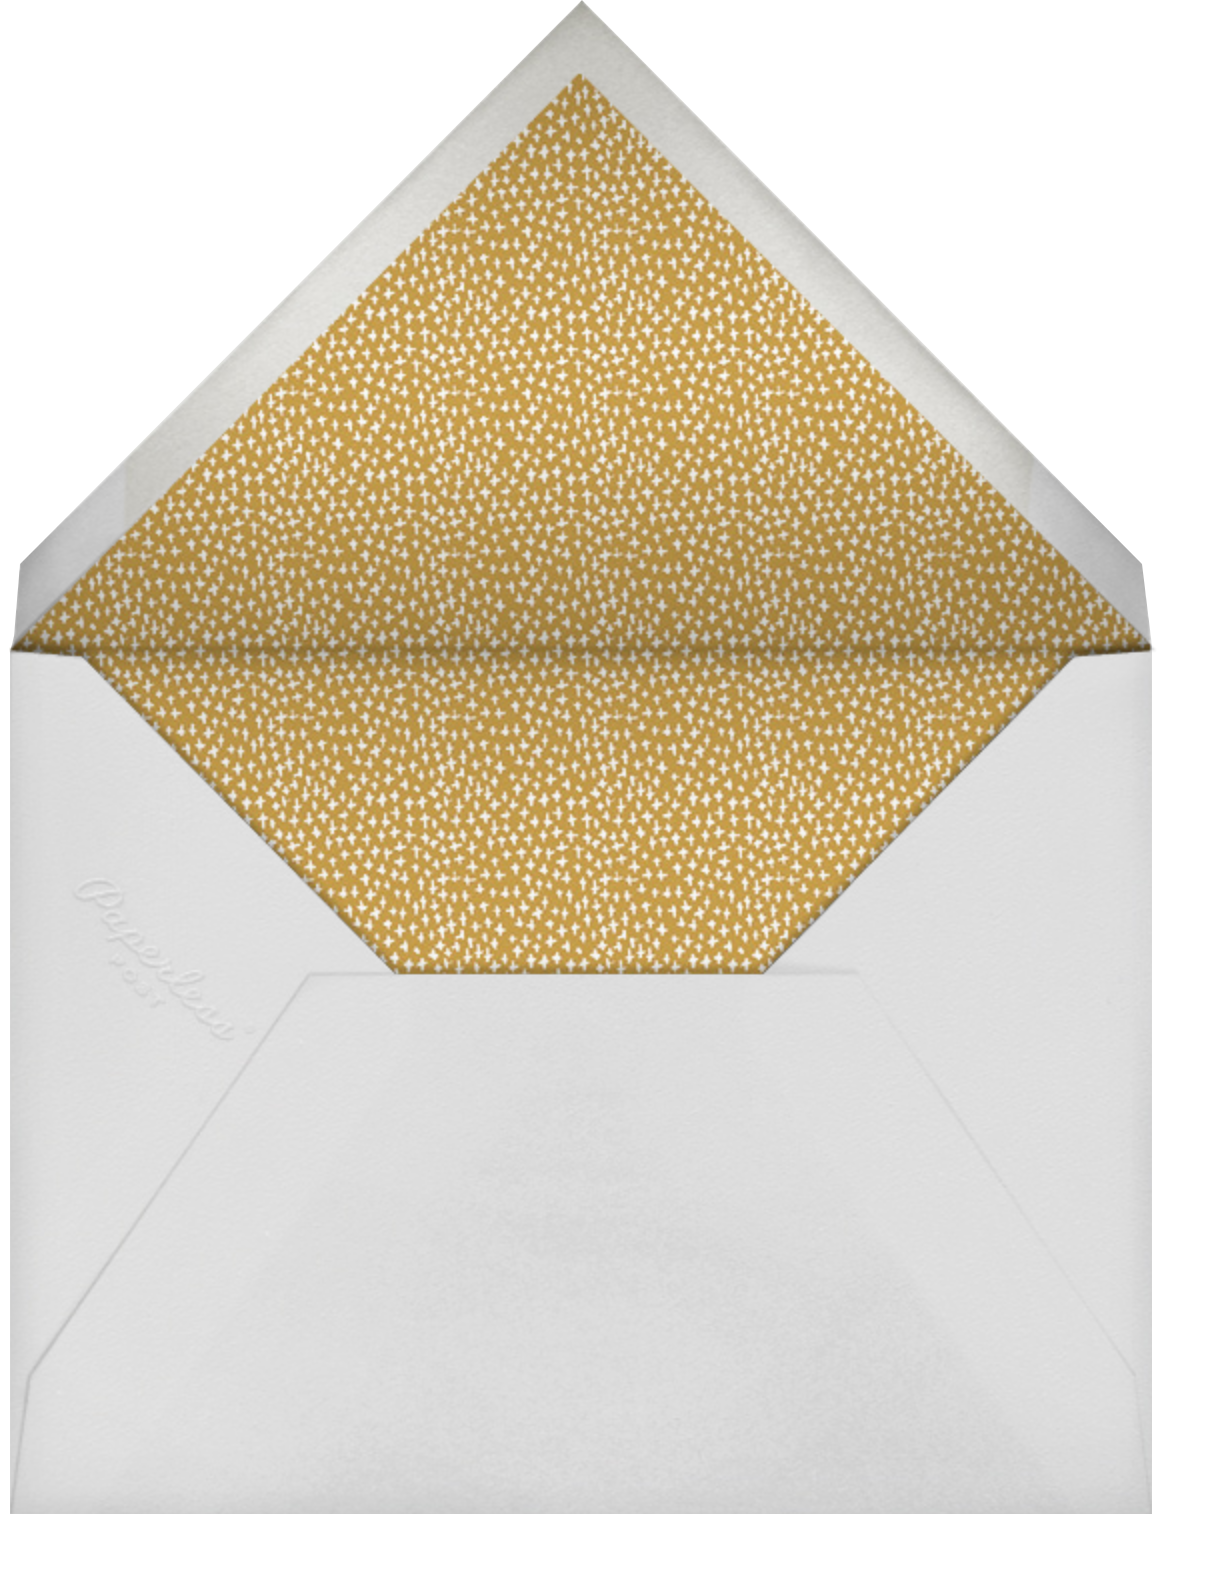 Among the Daisies - Amazon - Mr. Boddington's Studio - Envelope